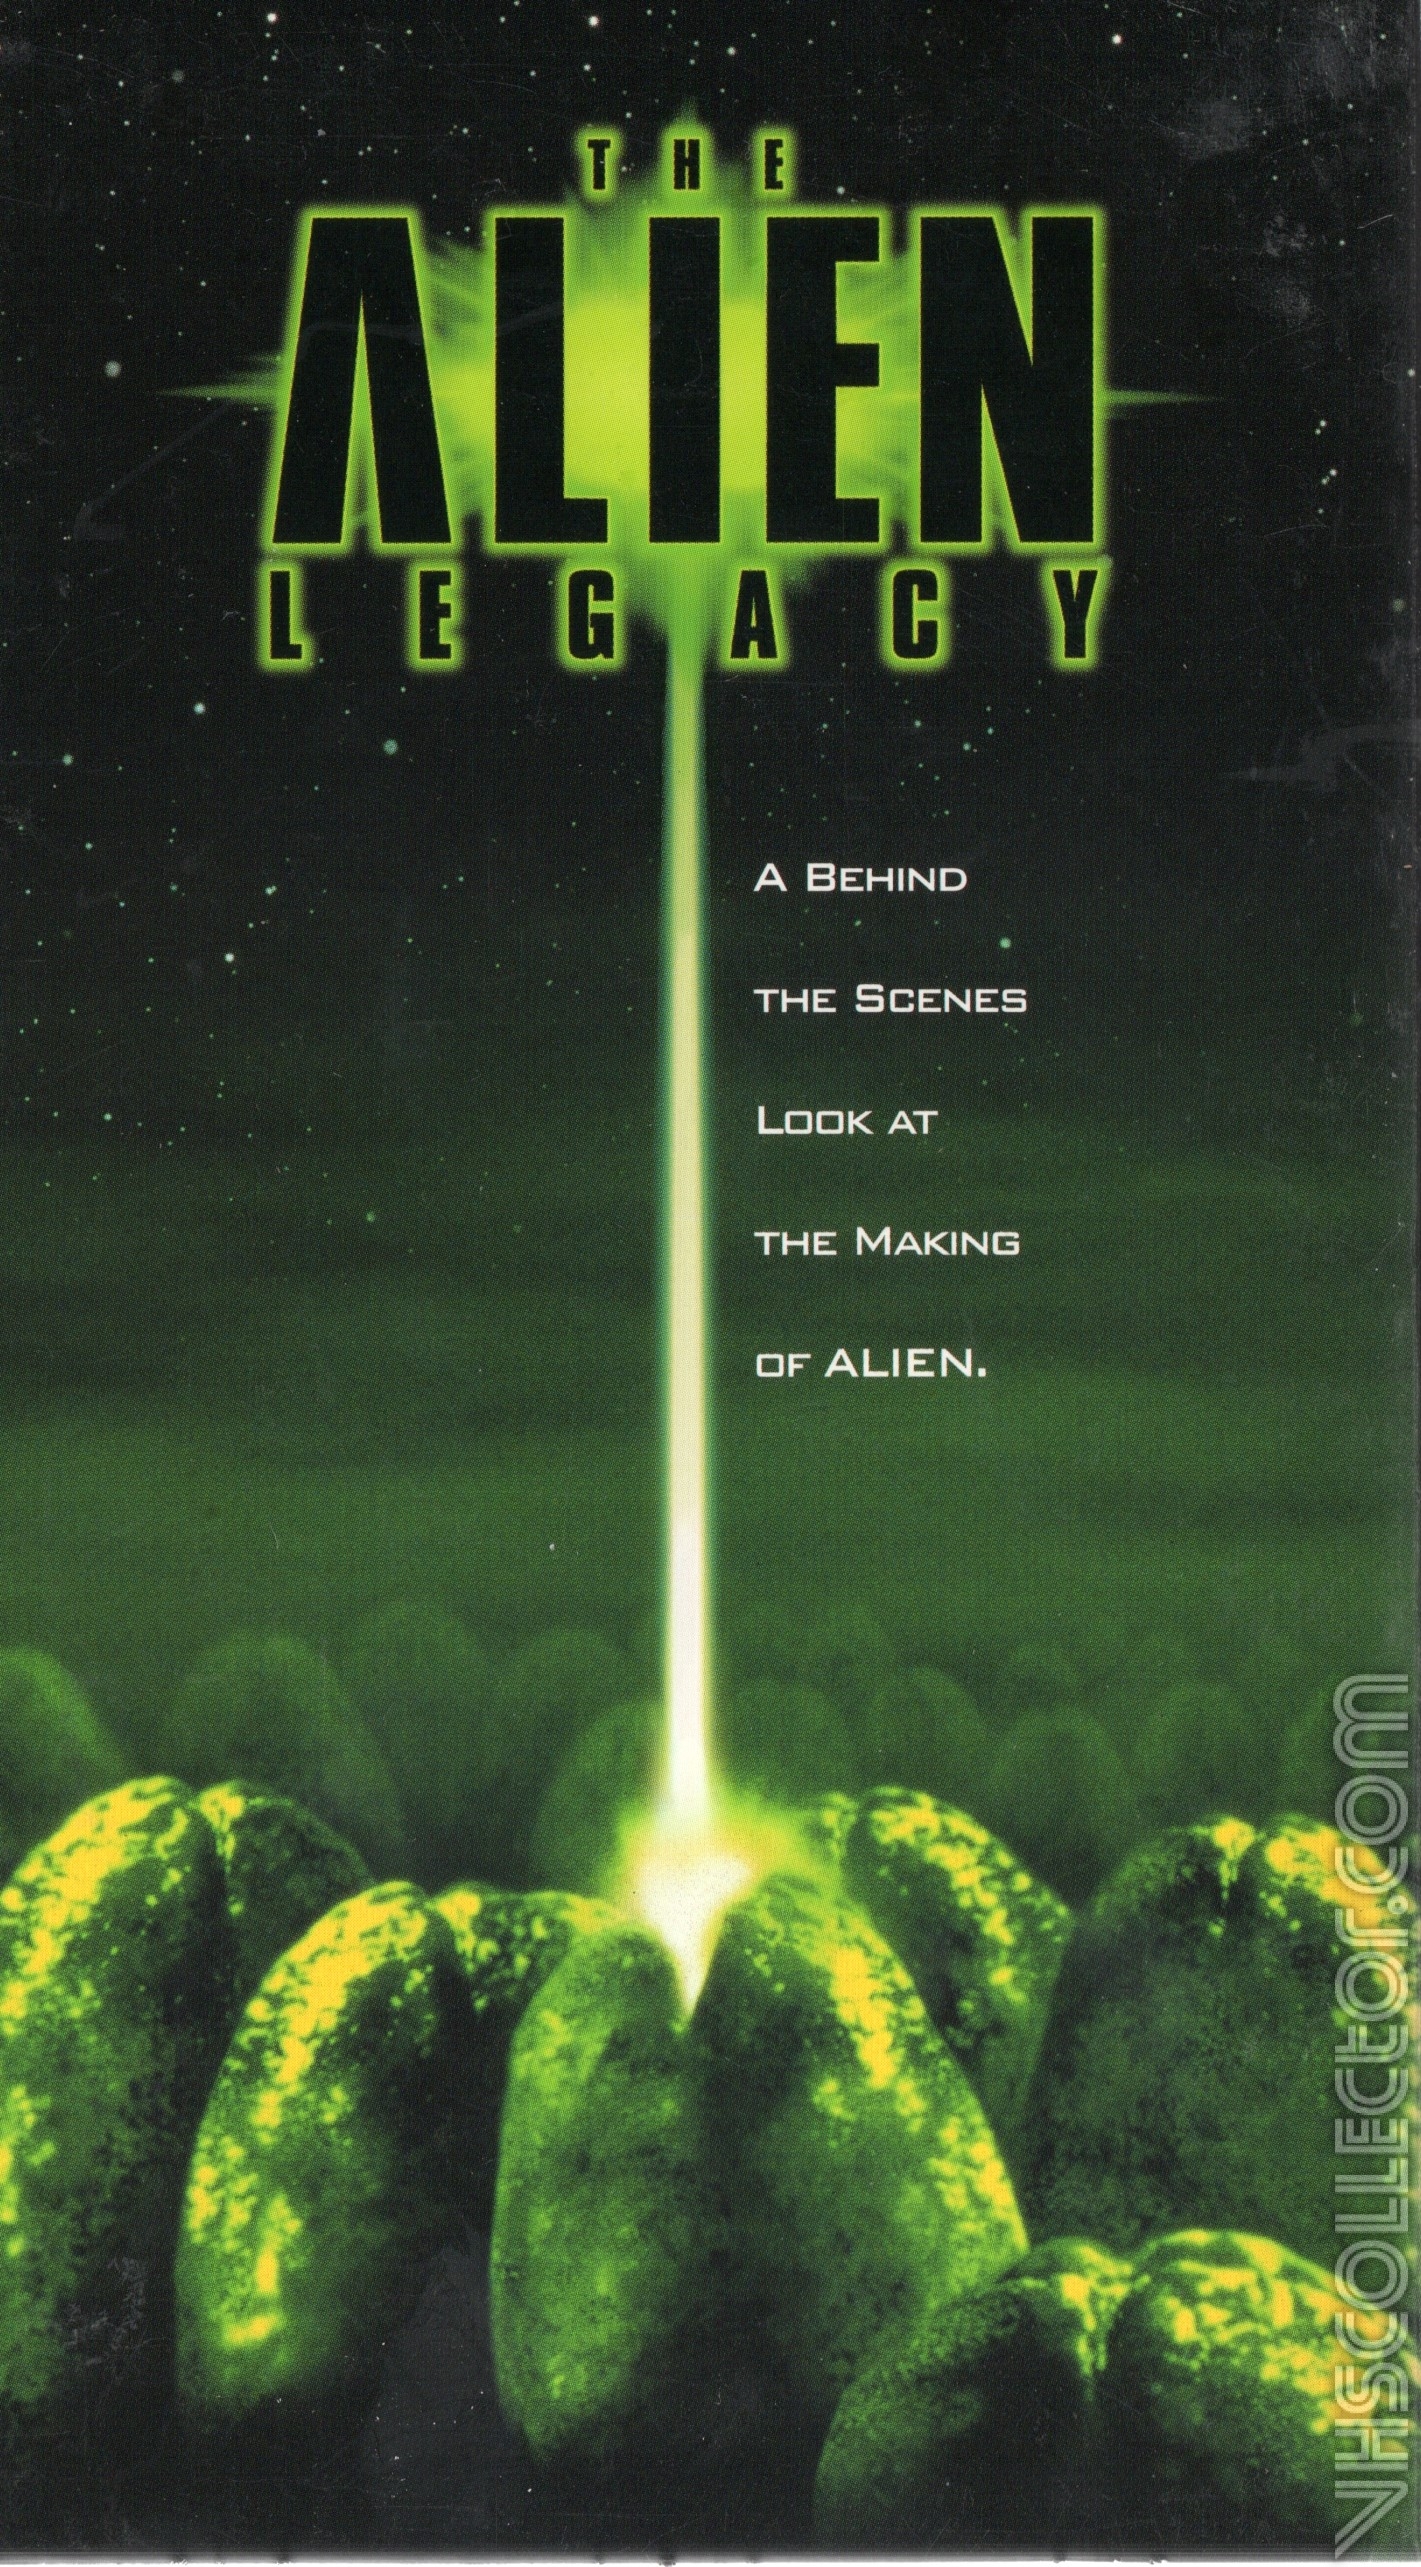 The Alien Legacy | VHSCollector.com